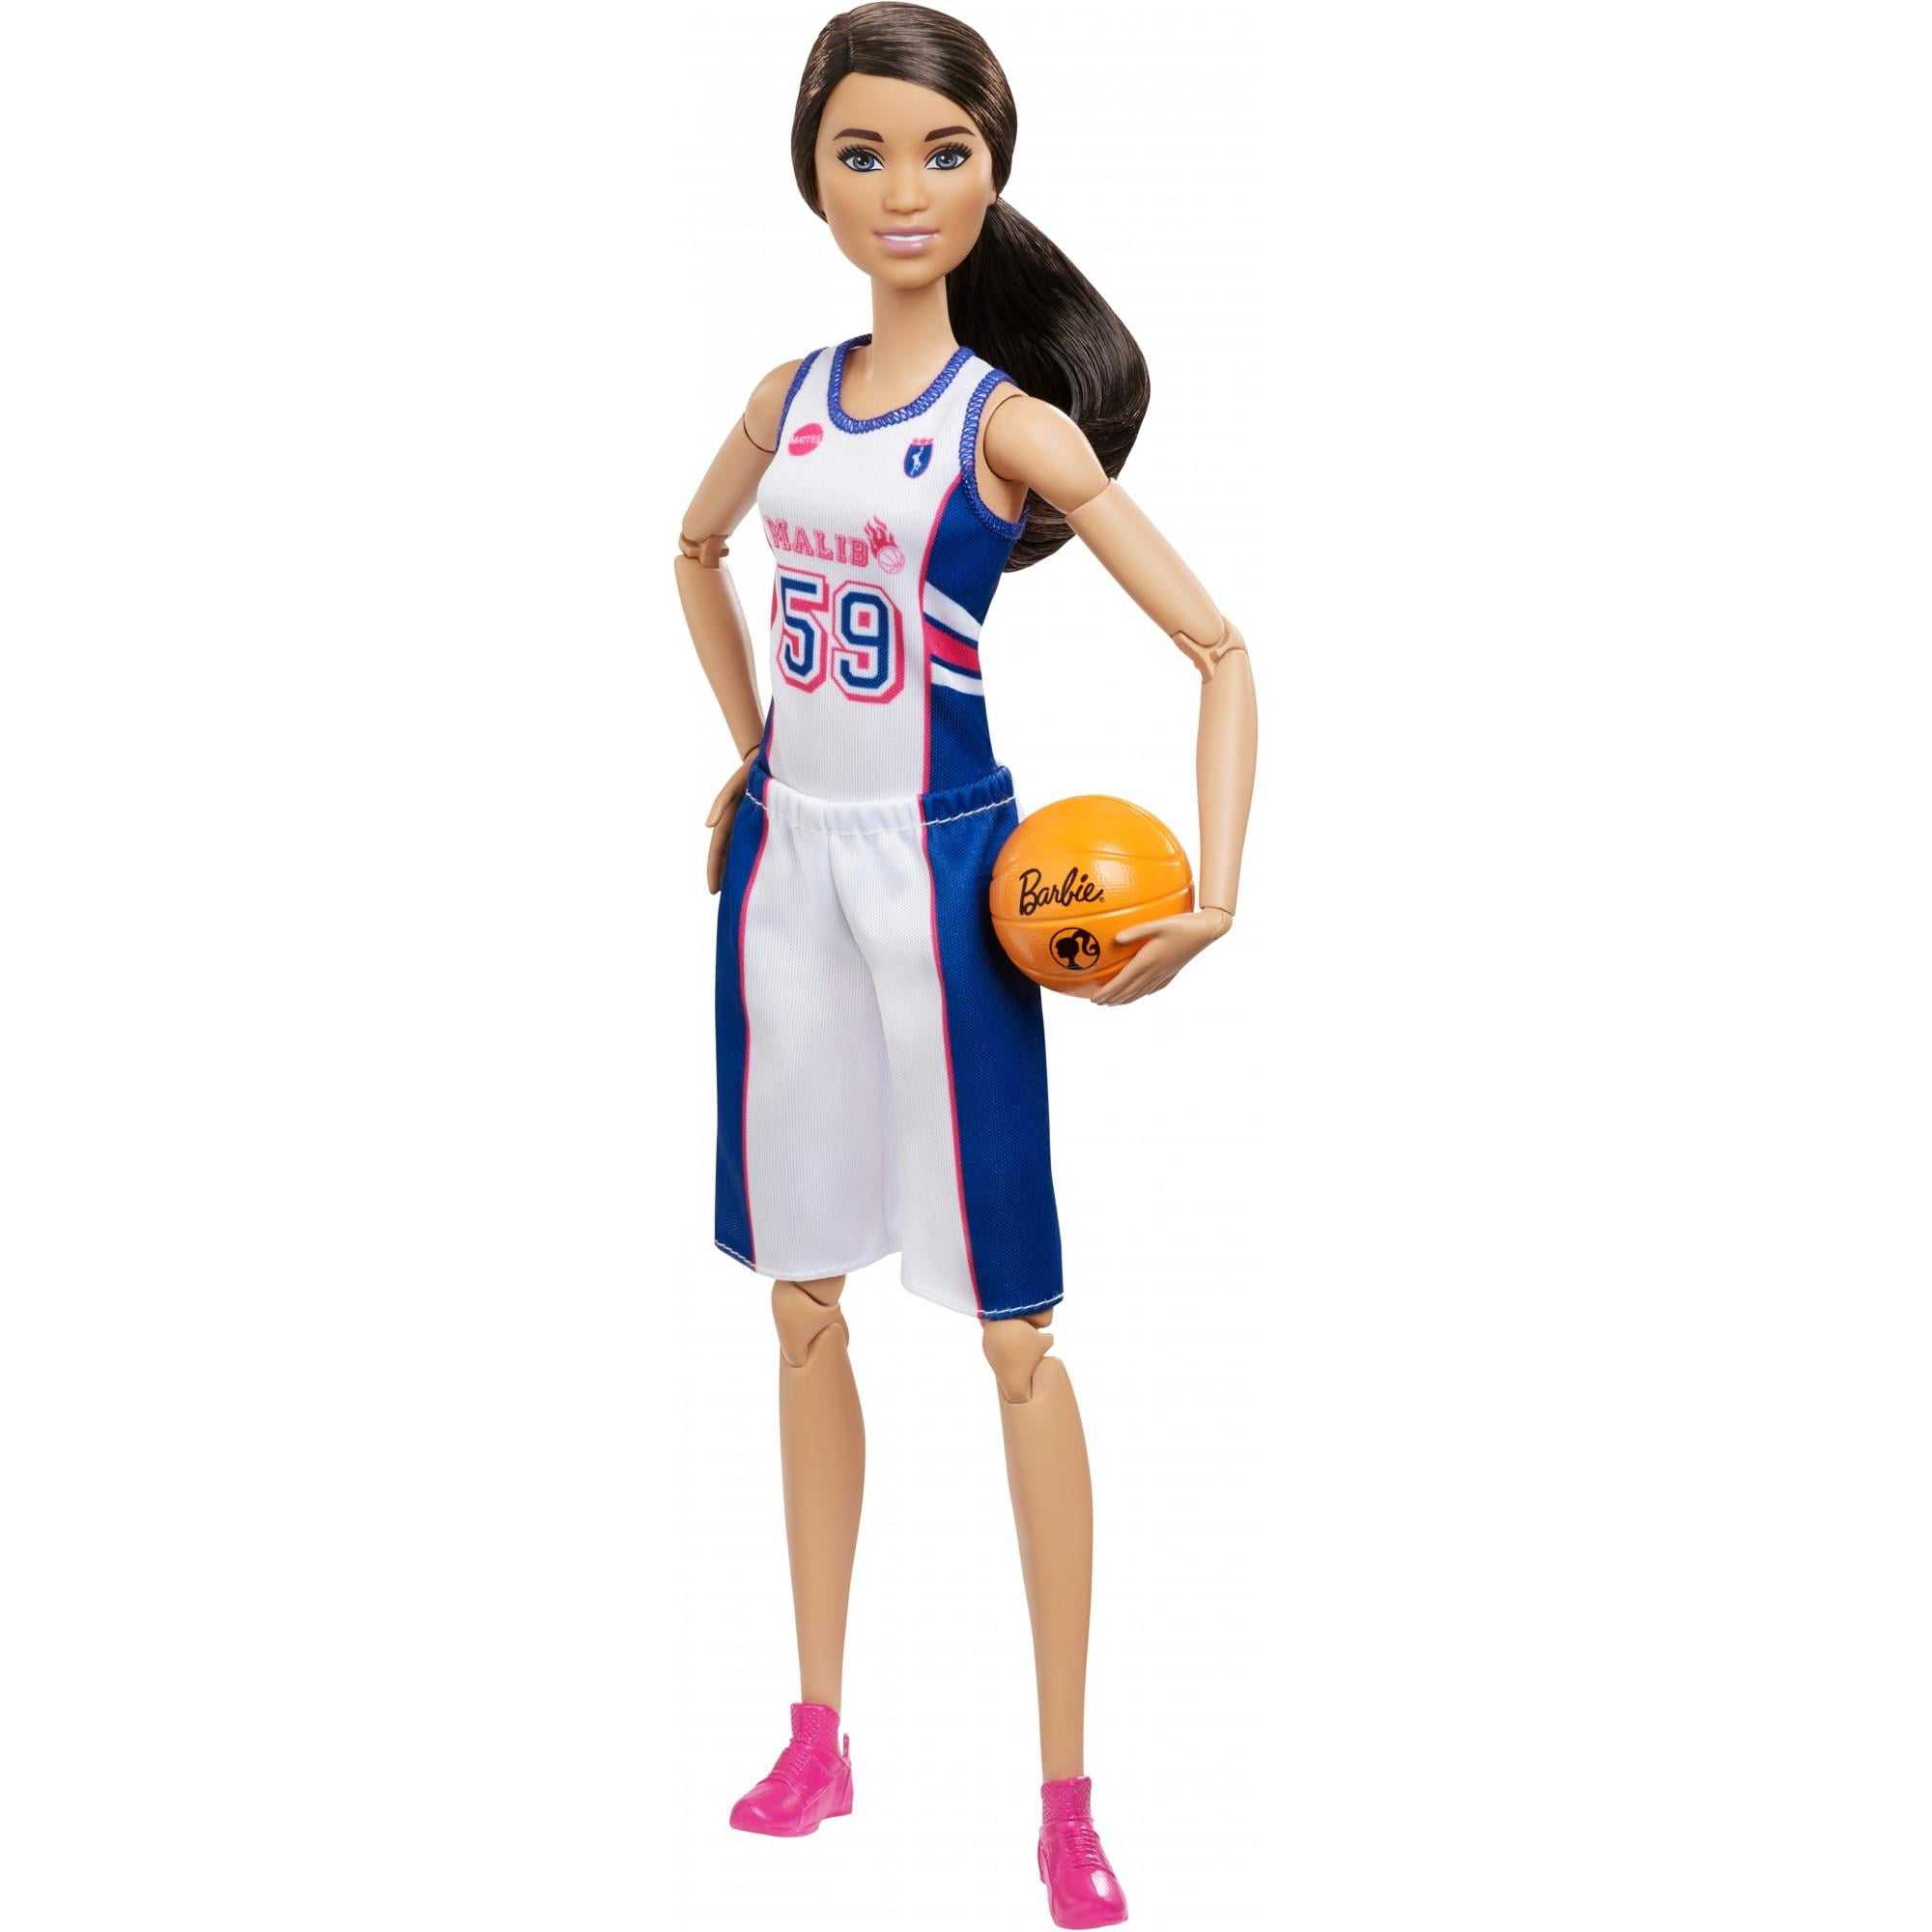 Barbie Made to Move Basketball Player 